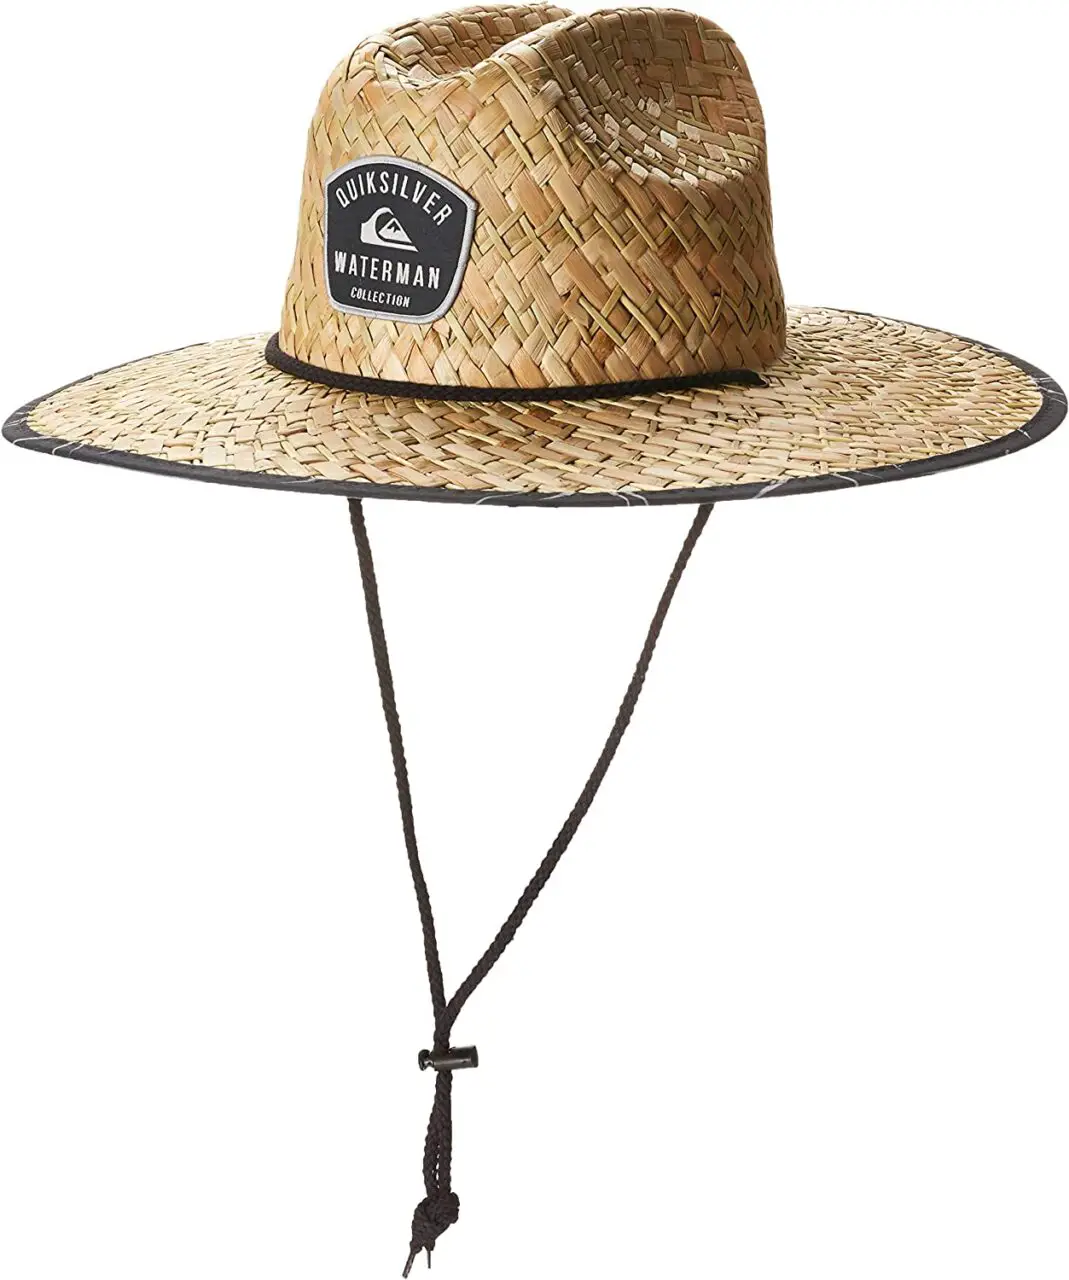 Quiksilver Men's Outsider Waterman Straw Fishing Hat